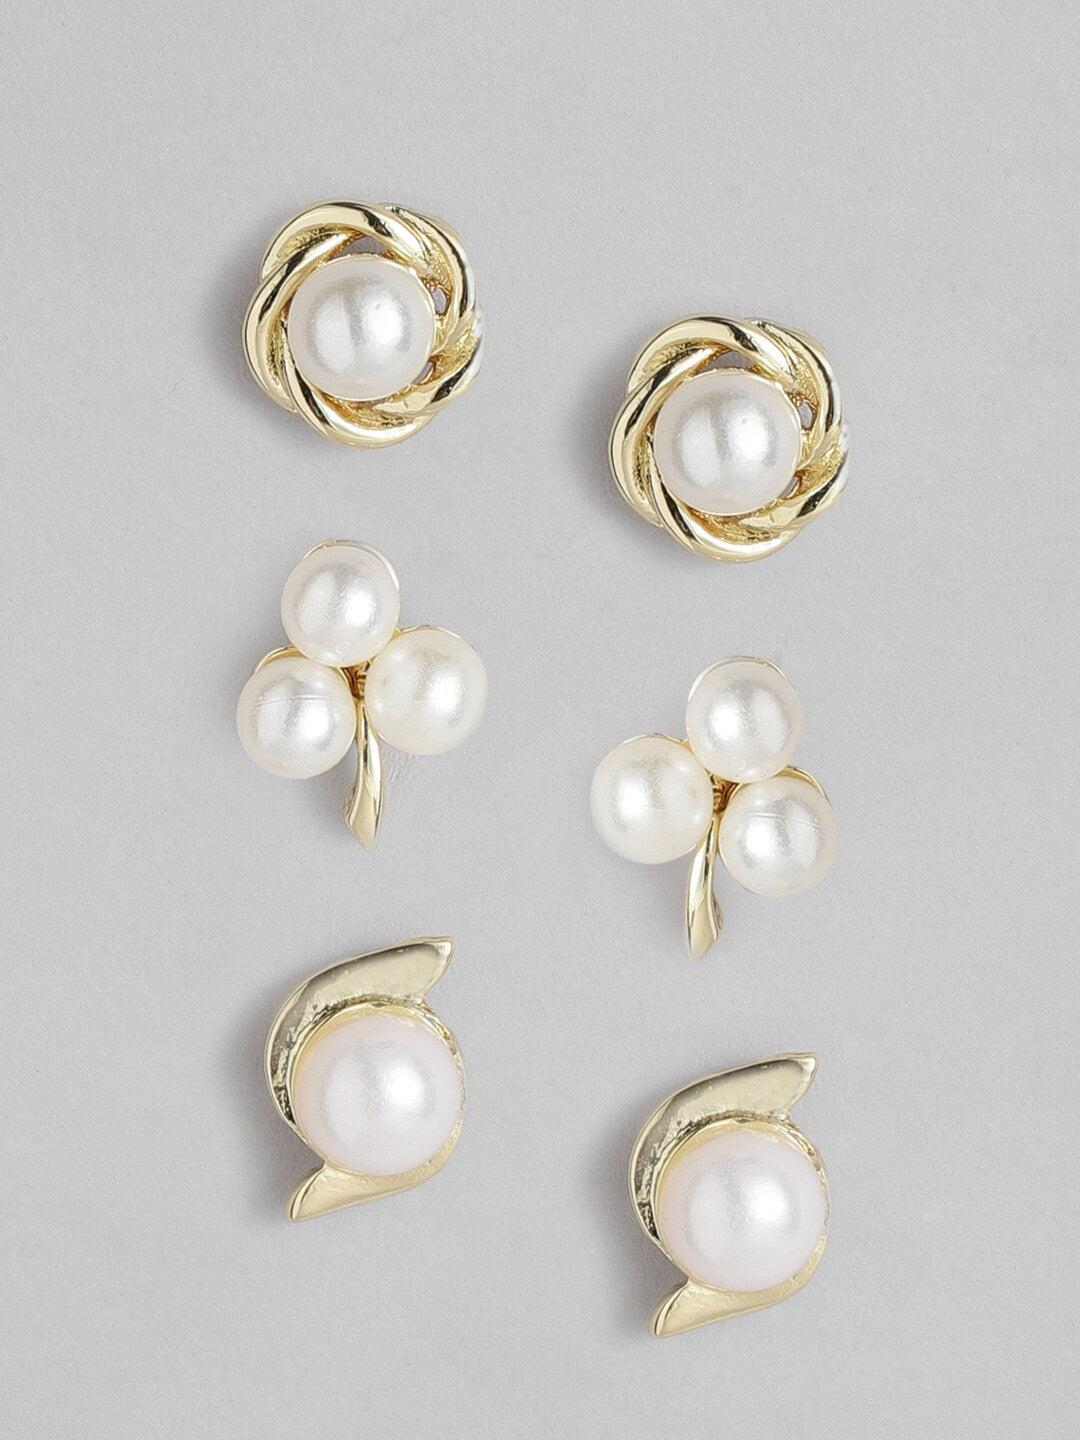 Estele Valentines Day Gift Pearl Stud Earrings Combo For Girls & Women